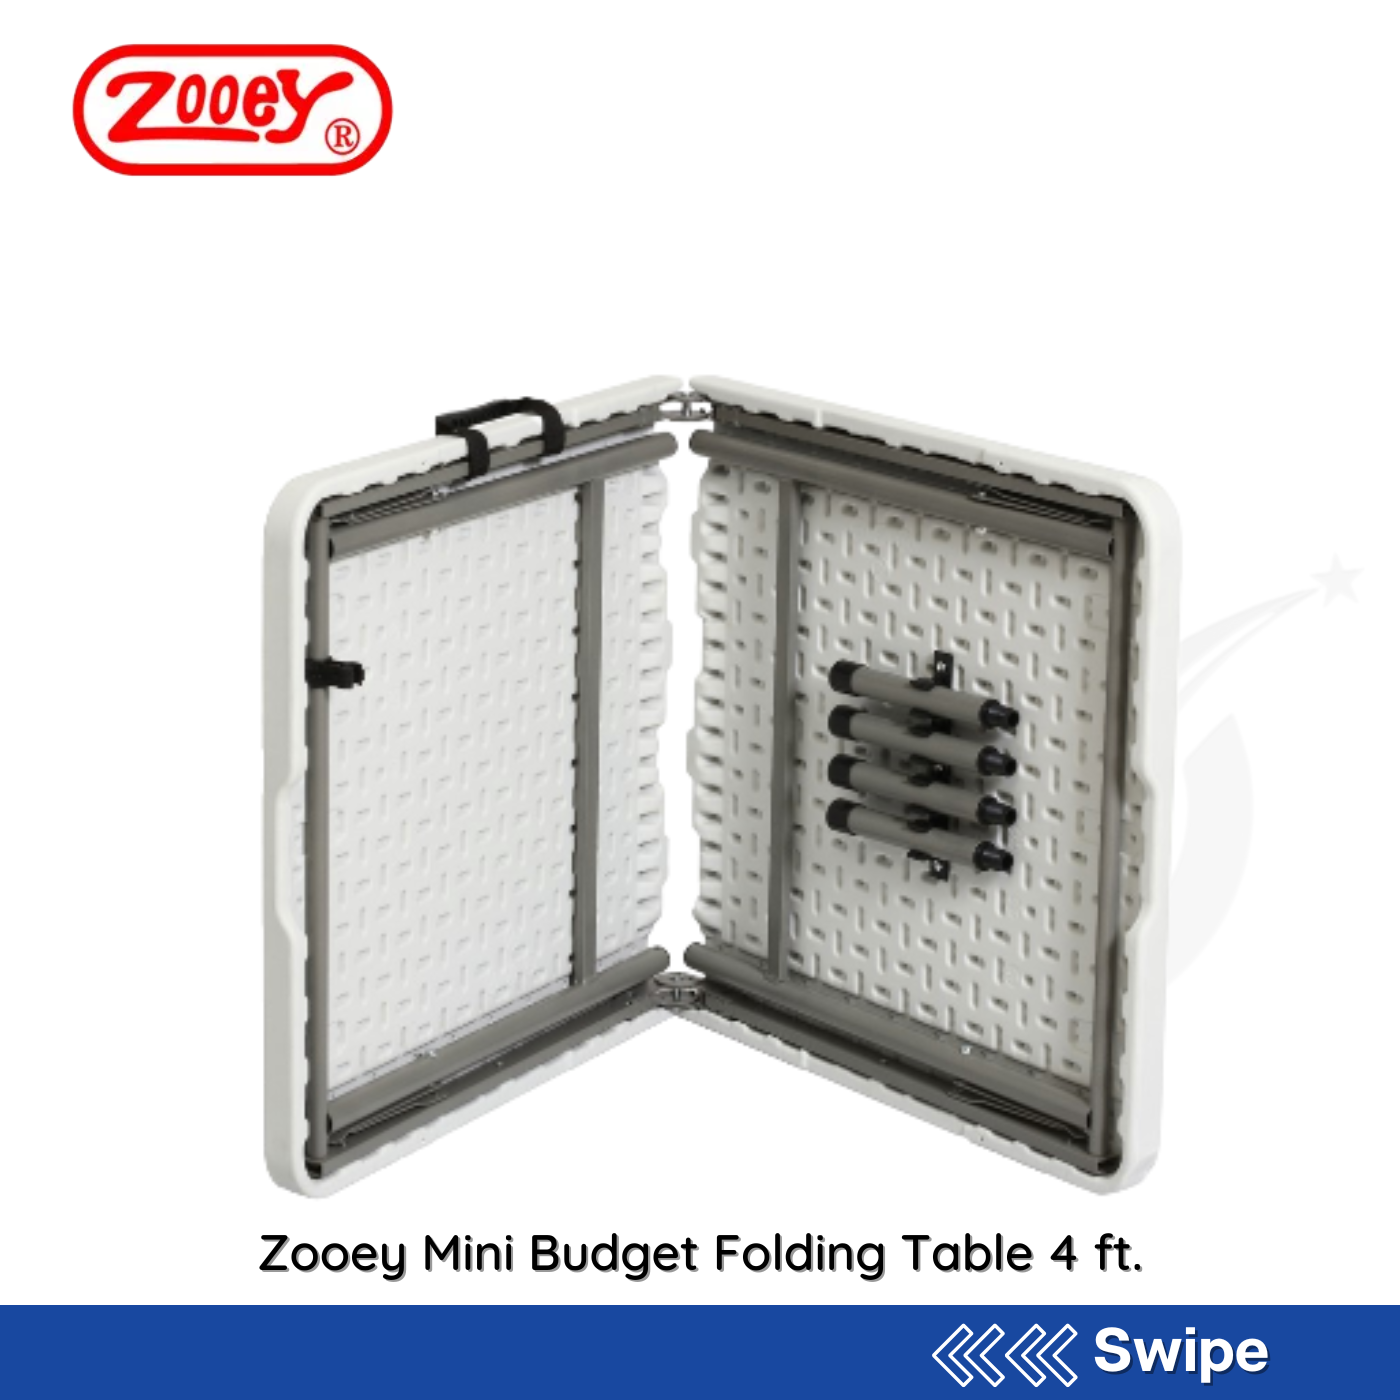 Zooey Mini Budget Folding Table 4 ft.